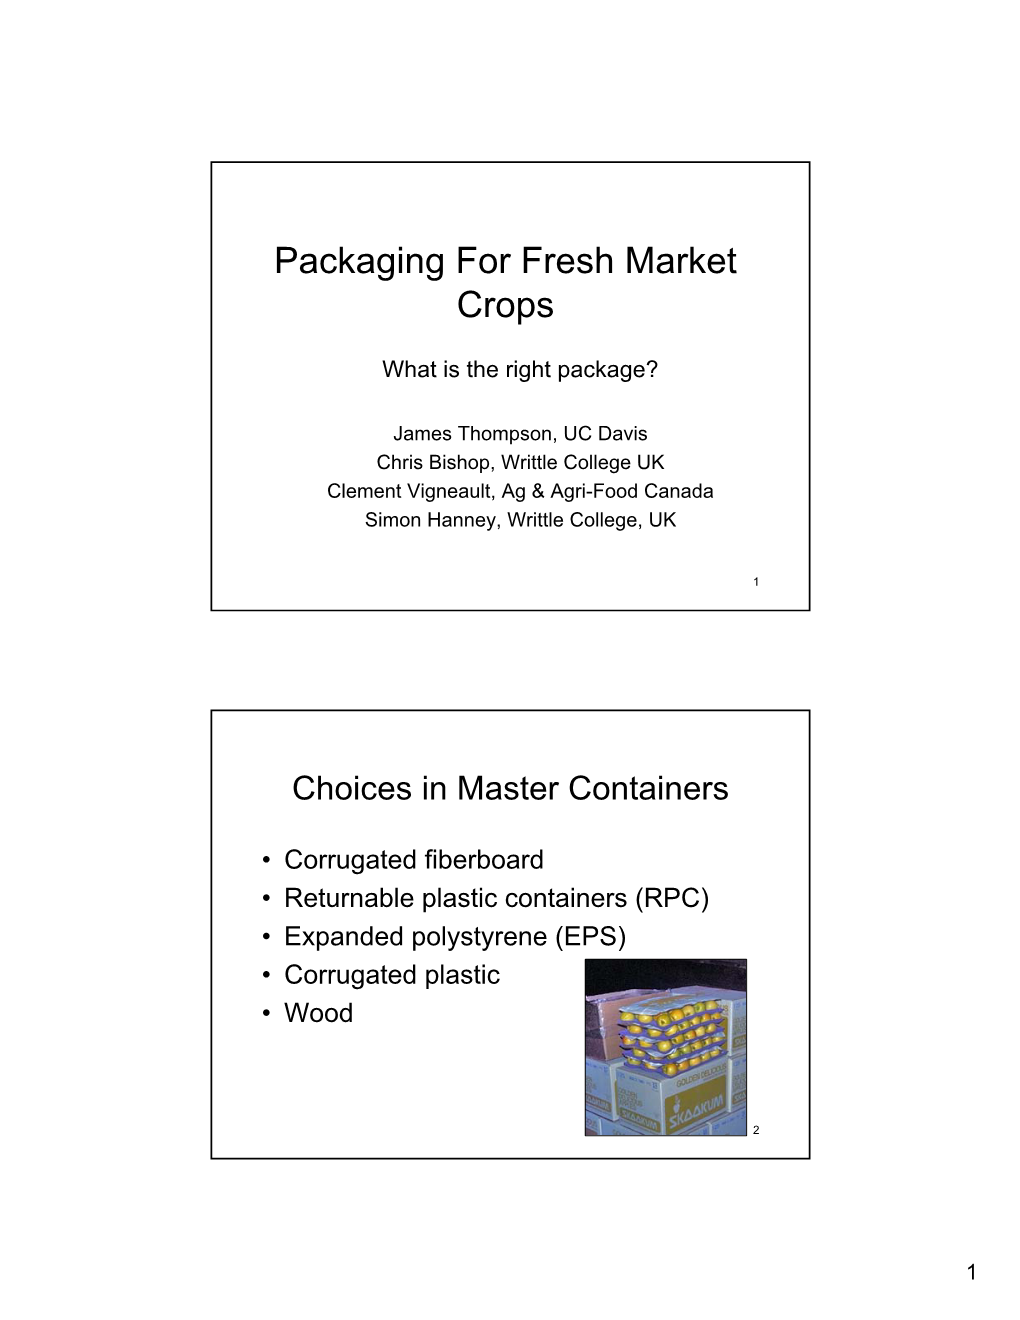 Packaging for Fresh Market Crops